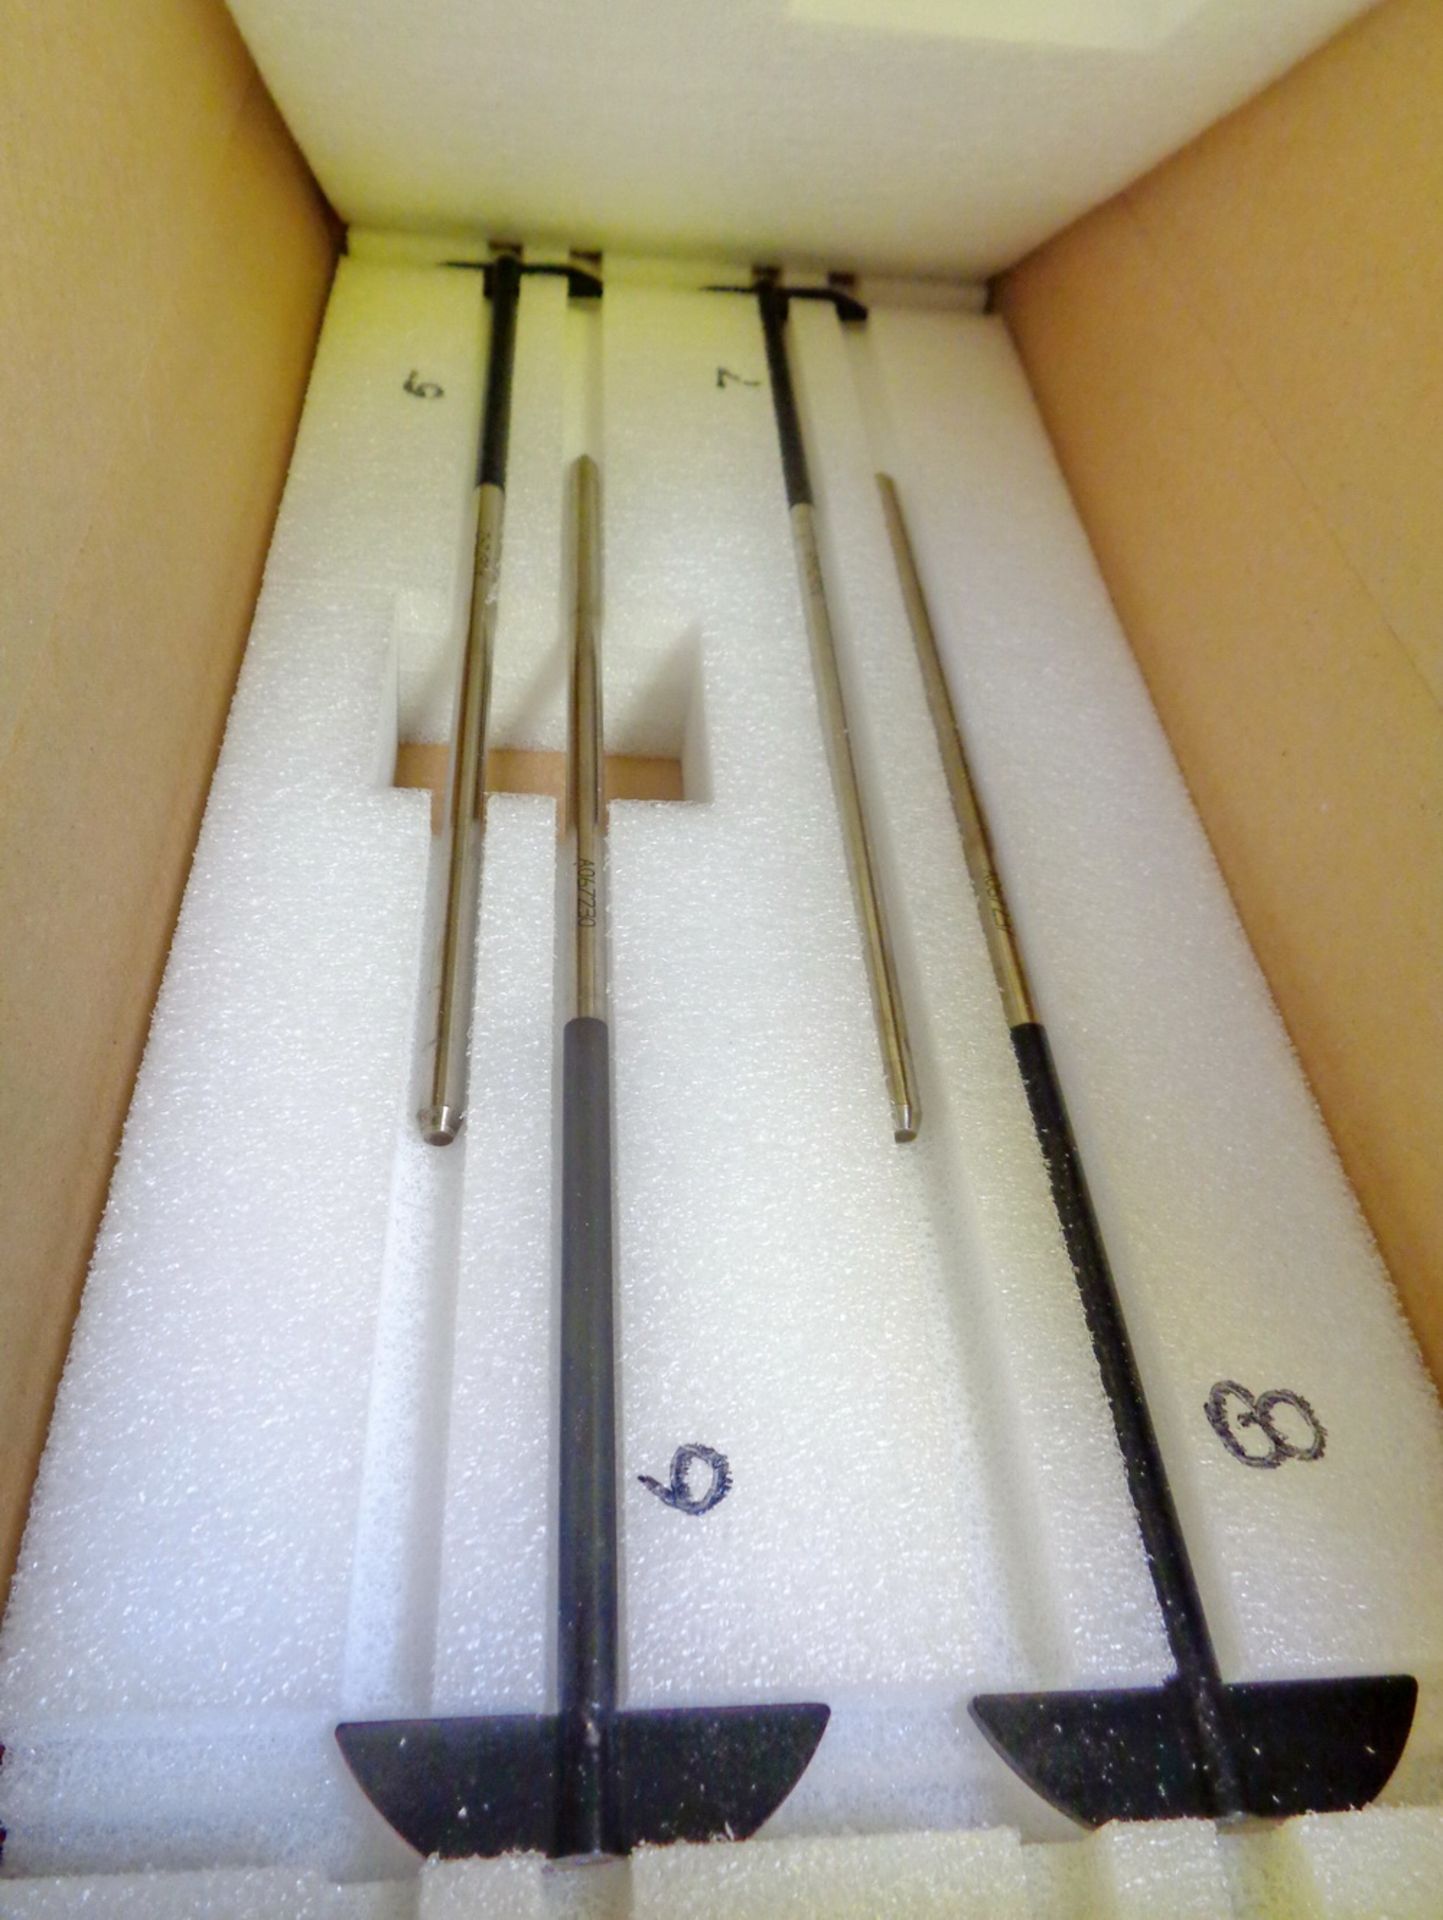 Unused Vankel box of 8 paddle agitators for dissolution system - Image 3 of 3